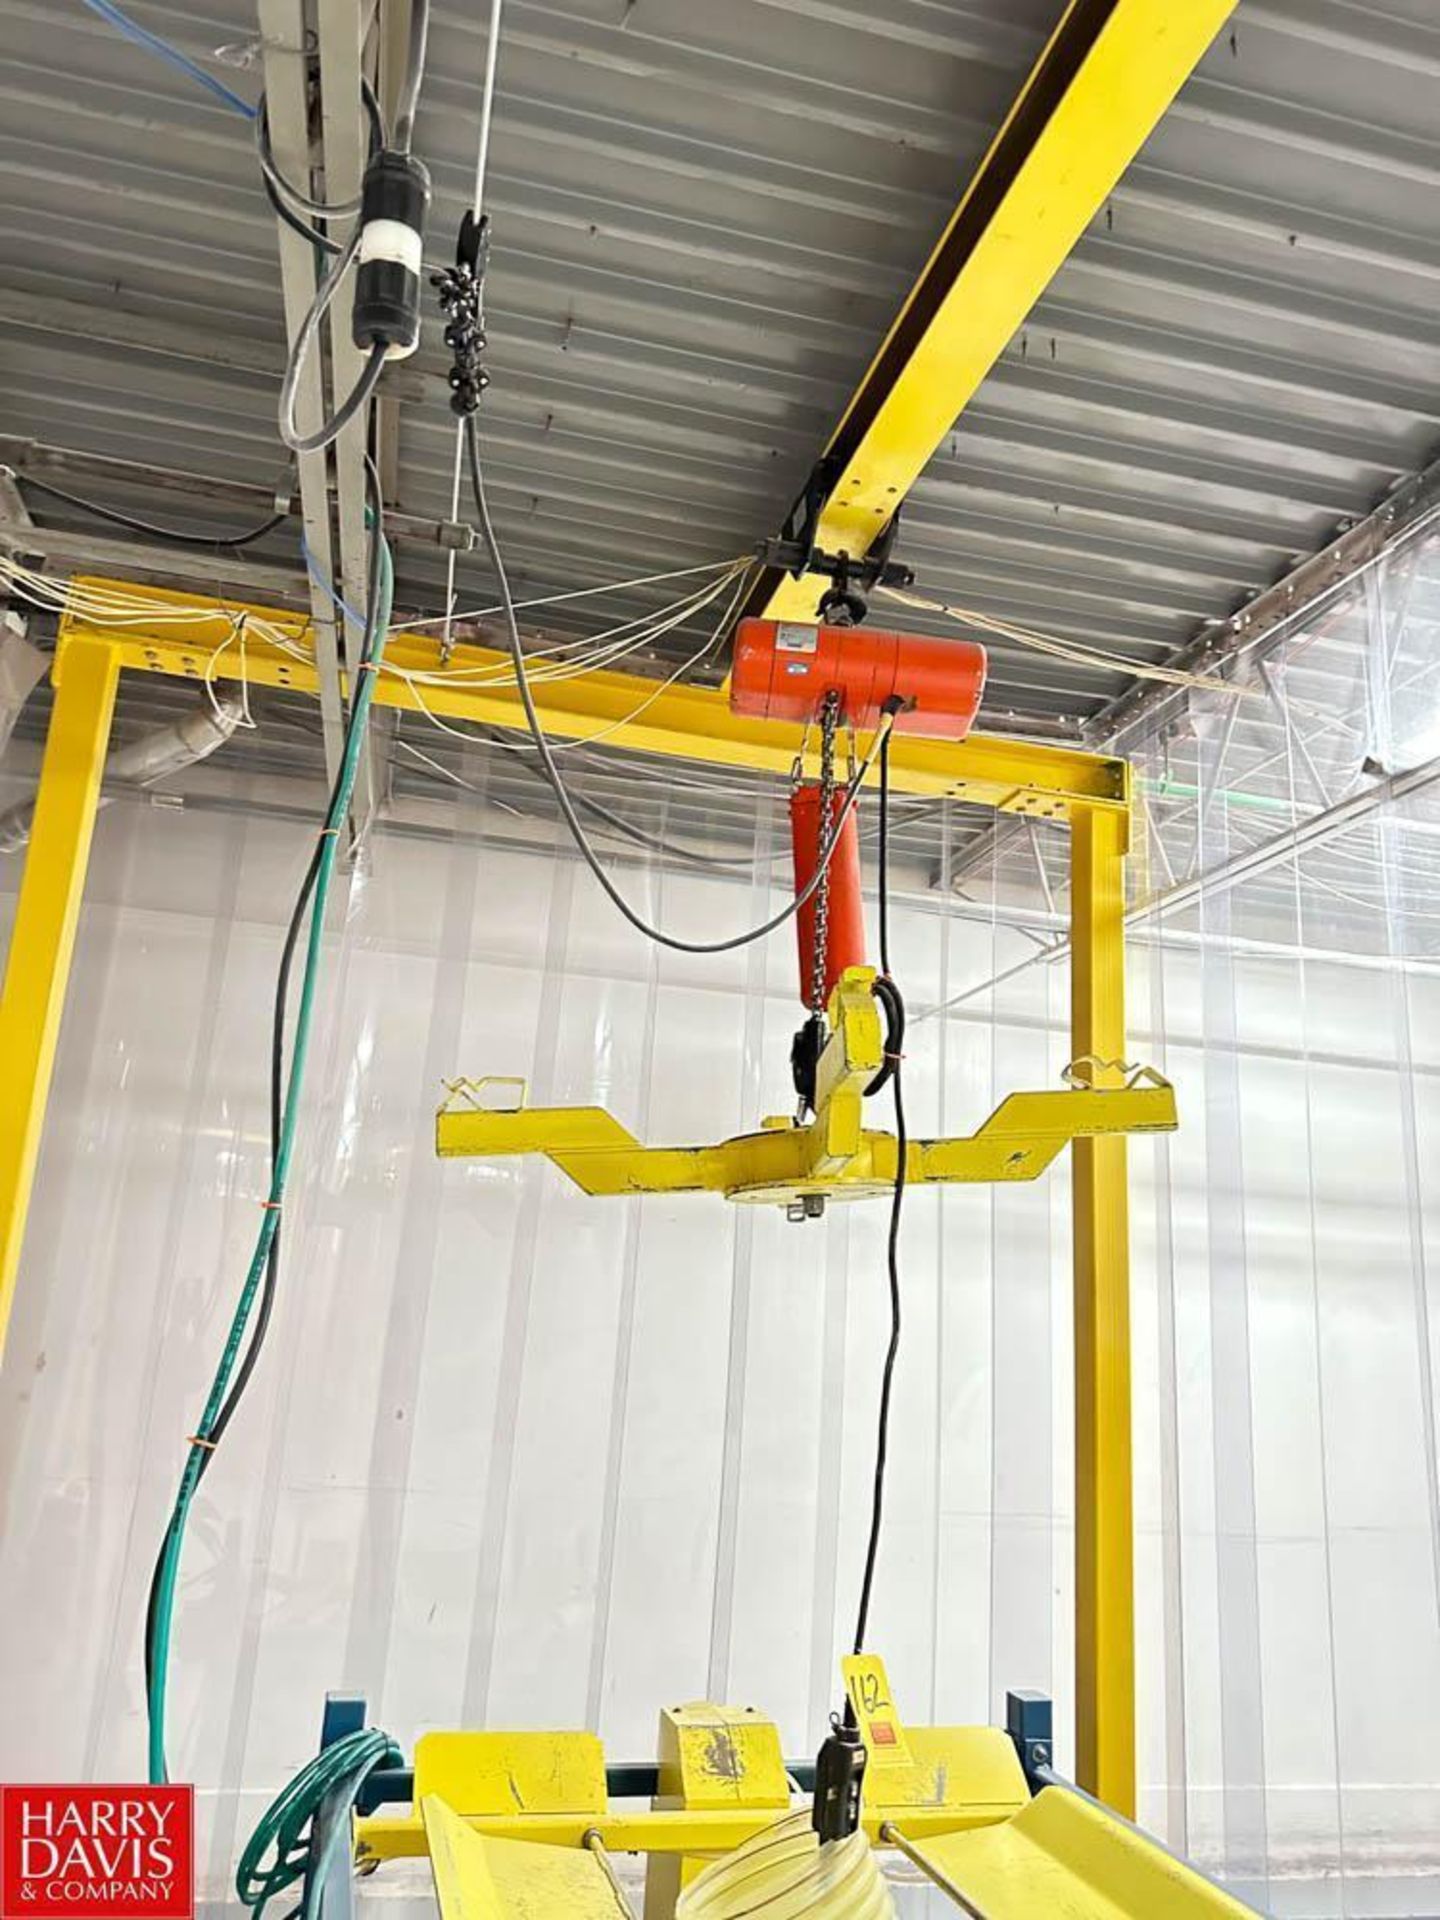 CM Lodestar 1 Ton Electric Chain Hoist with Gantry System - Rigging Fee: $750